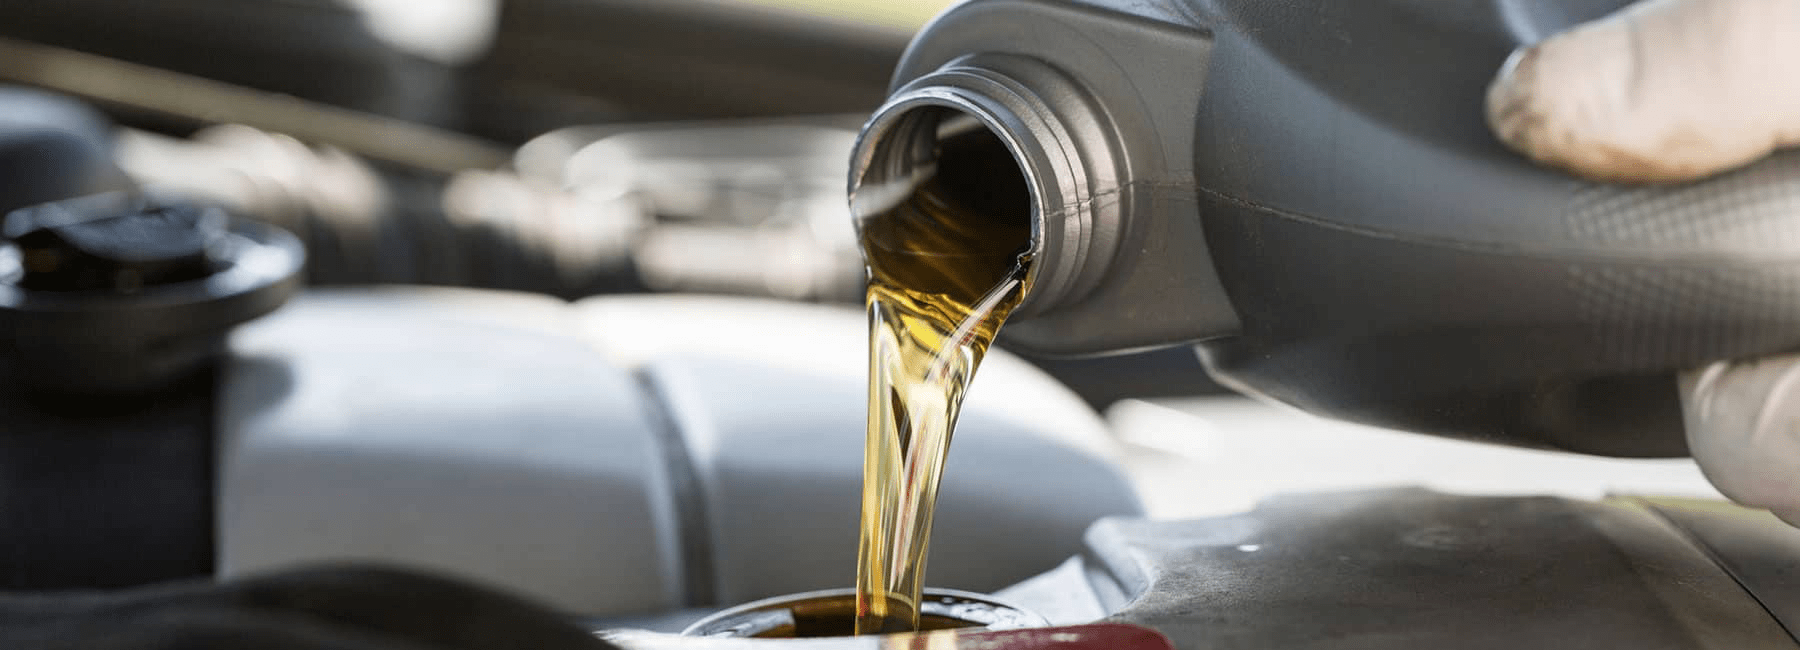 service technician pours oil in car engine